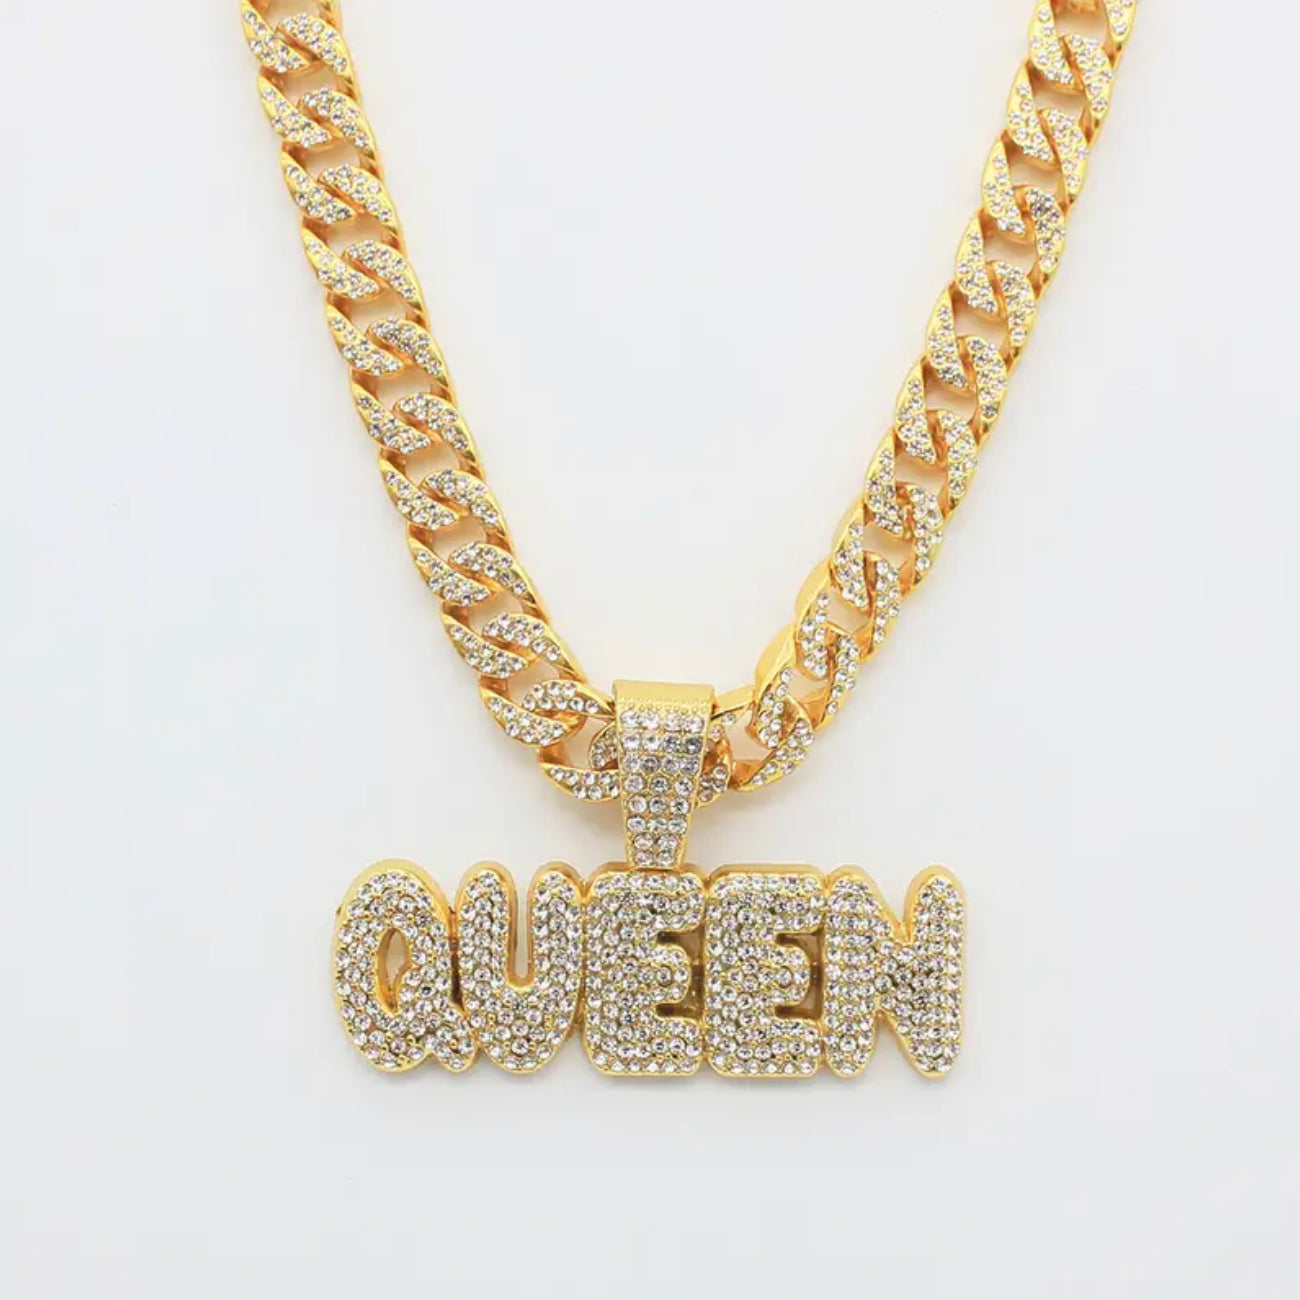 Queen Pendant Ladies Chain